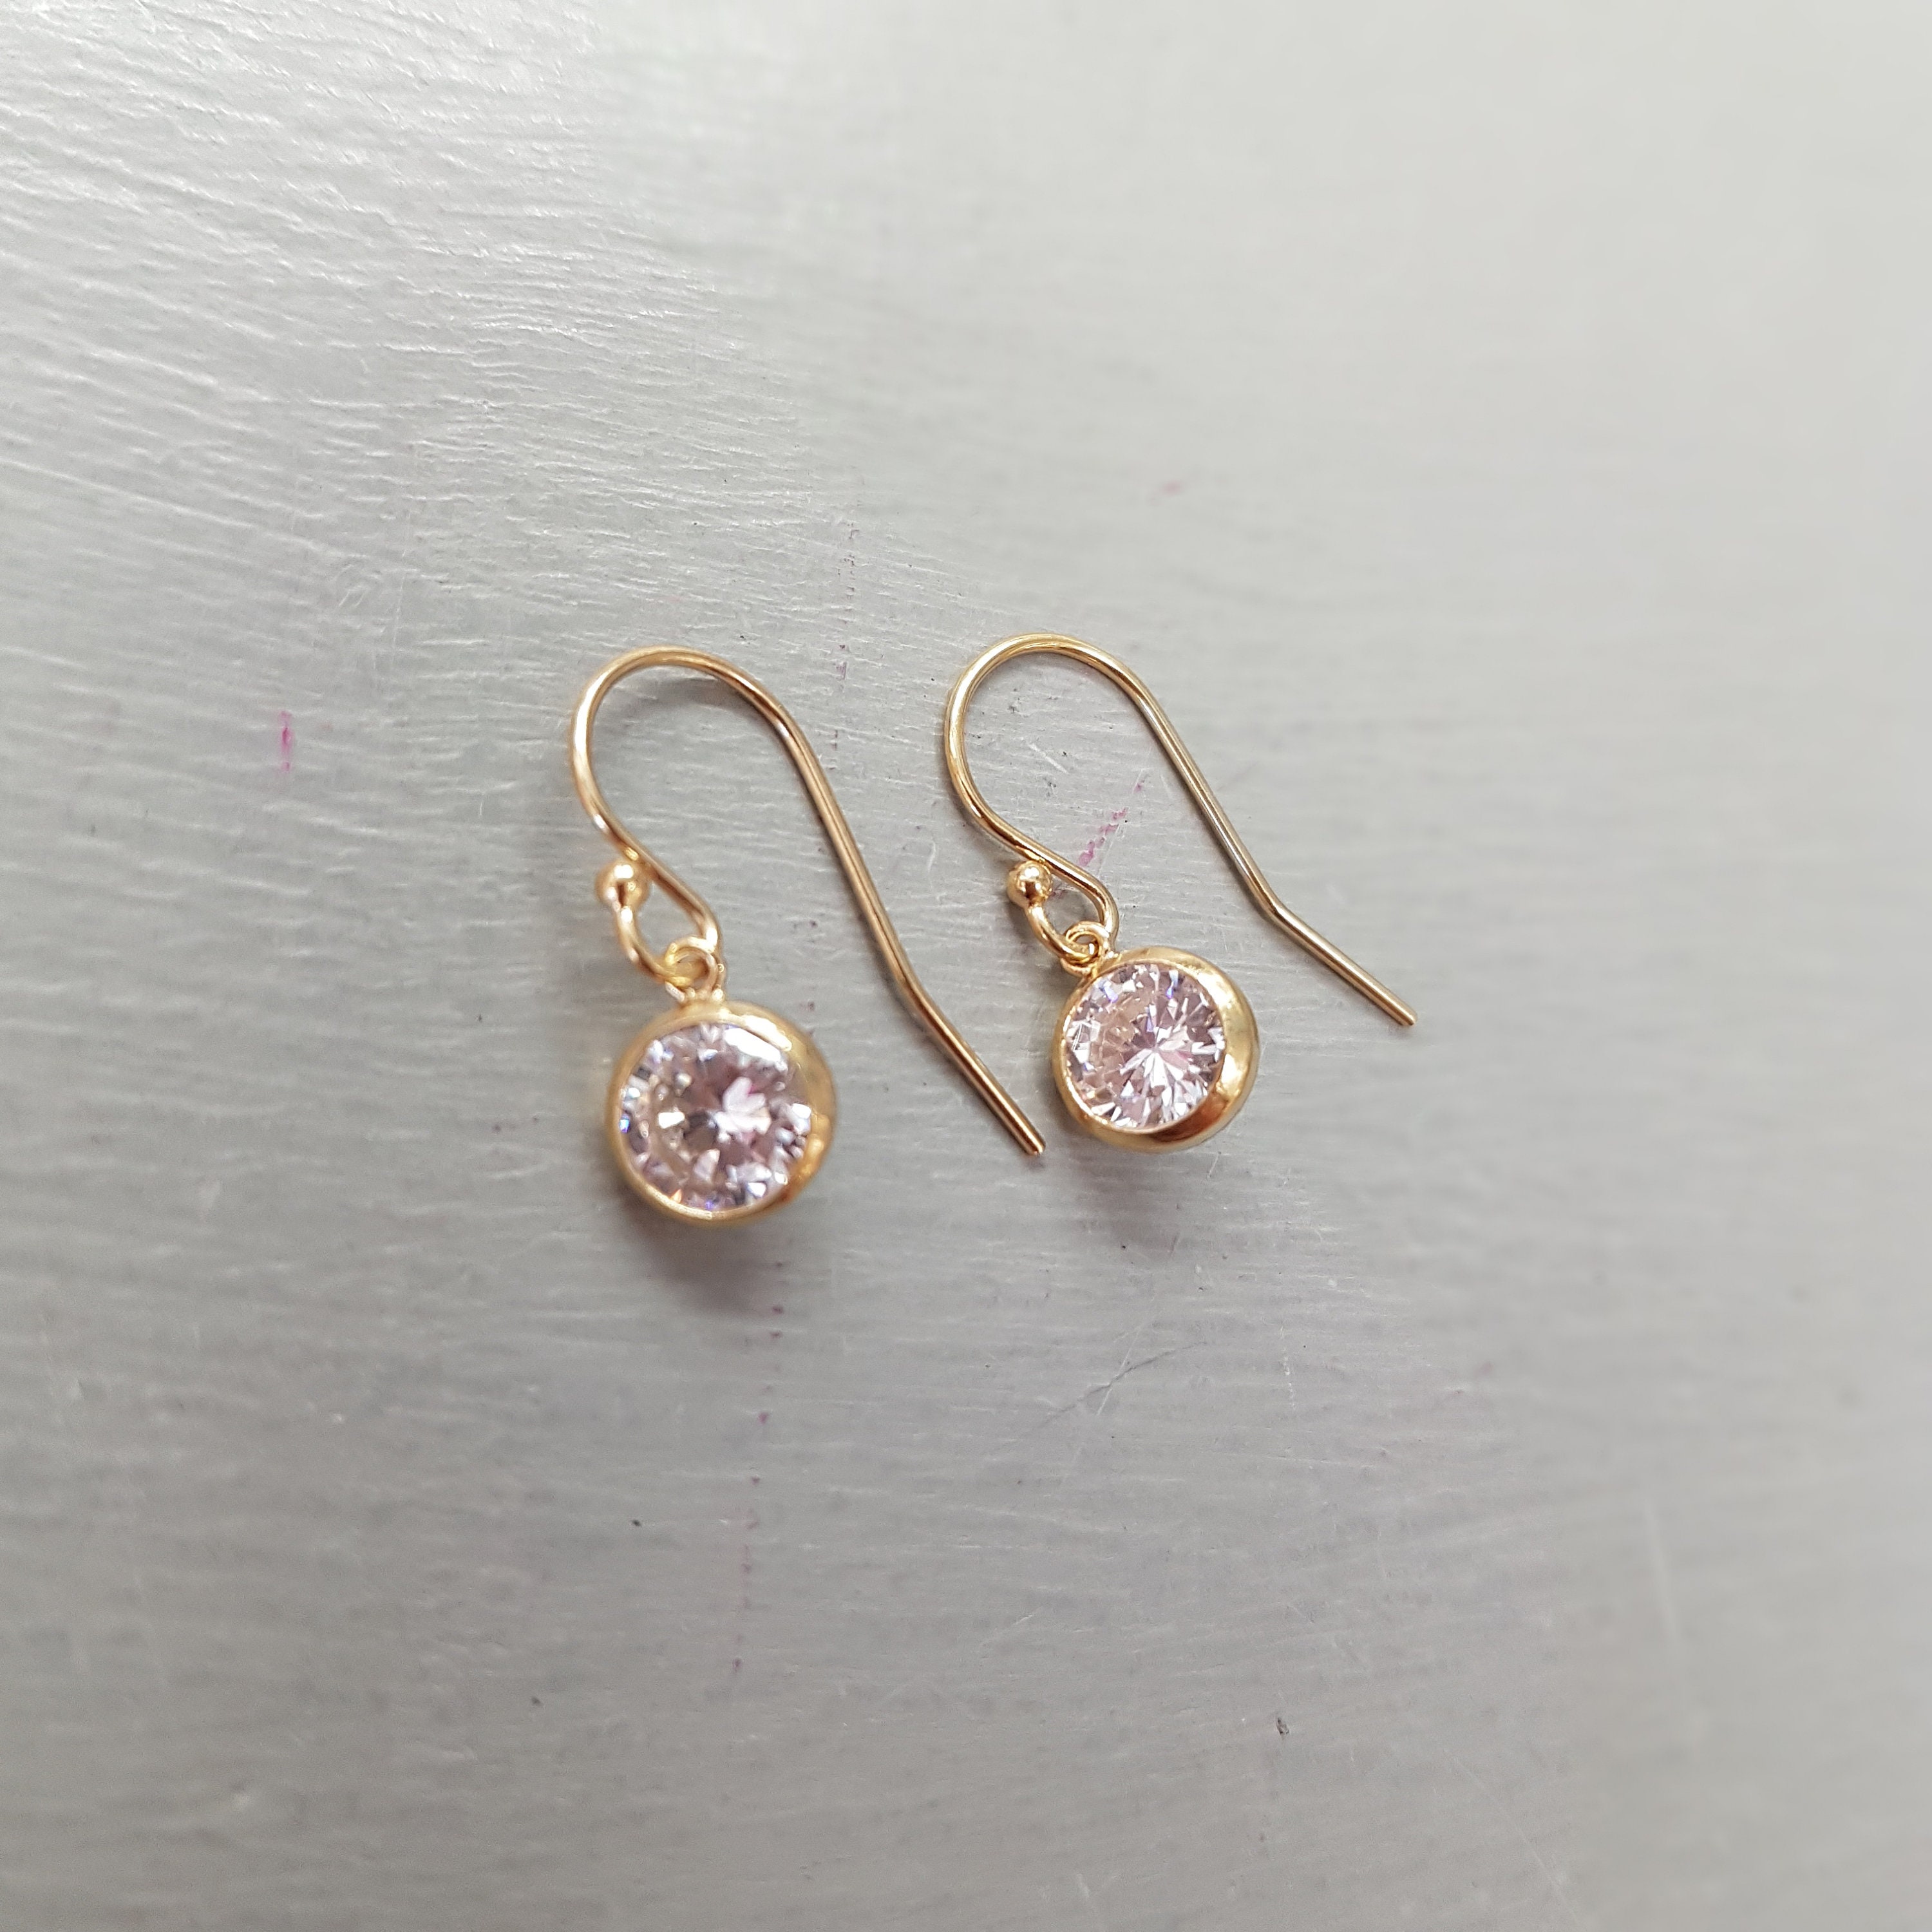 Tiny Gold Fill CZ Diamond Earrings Leverback or Rose Gold Fill - Etsy UK